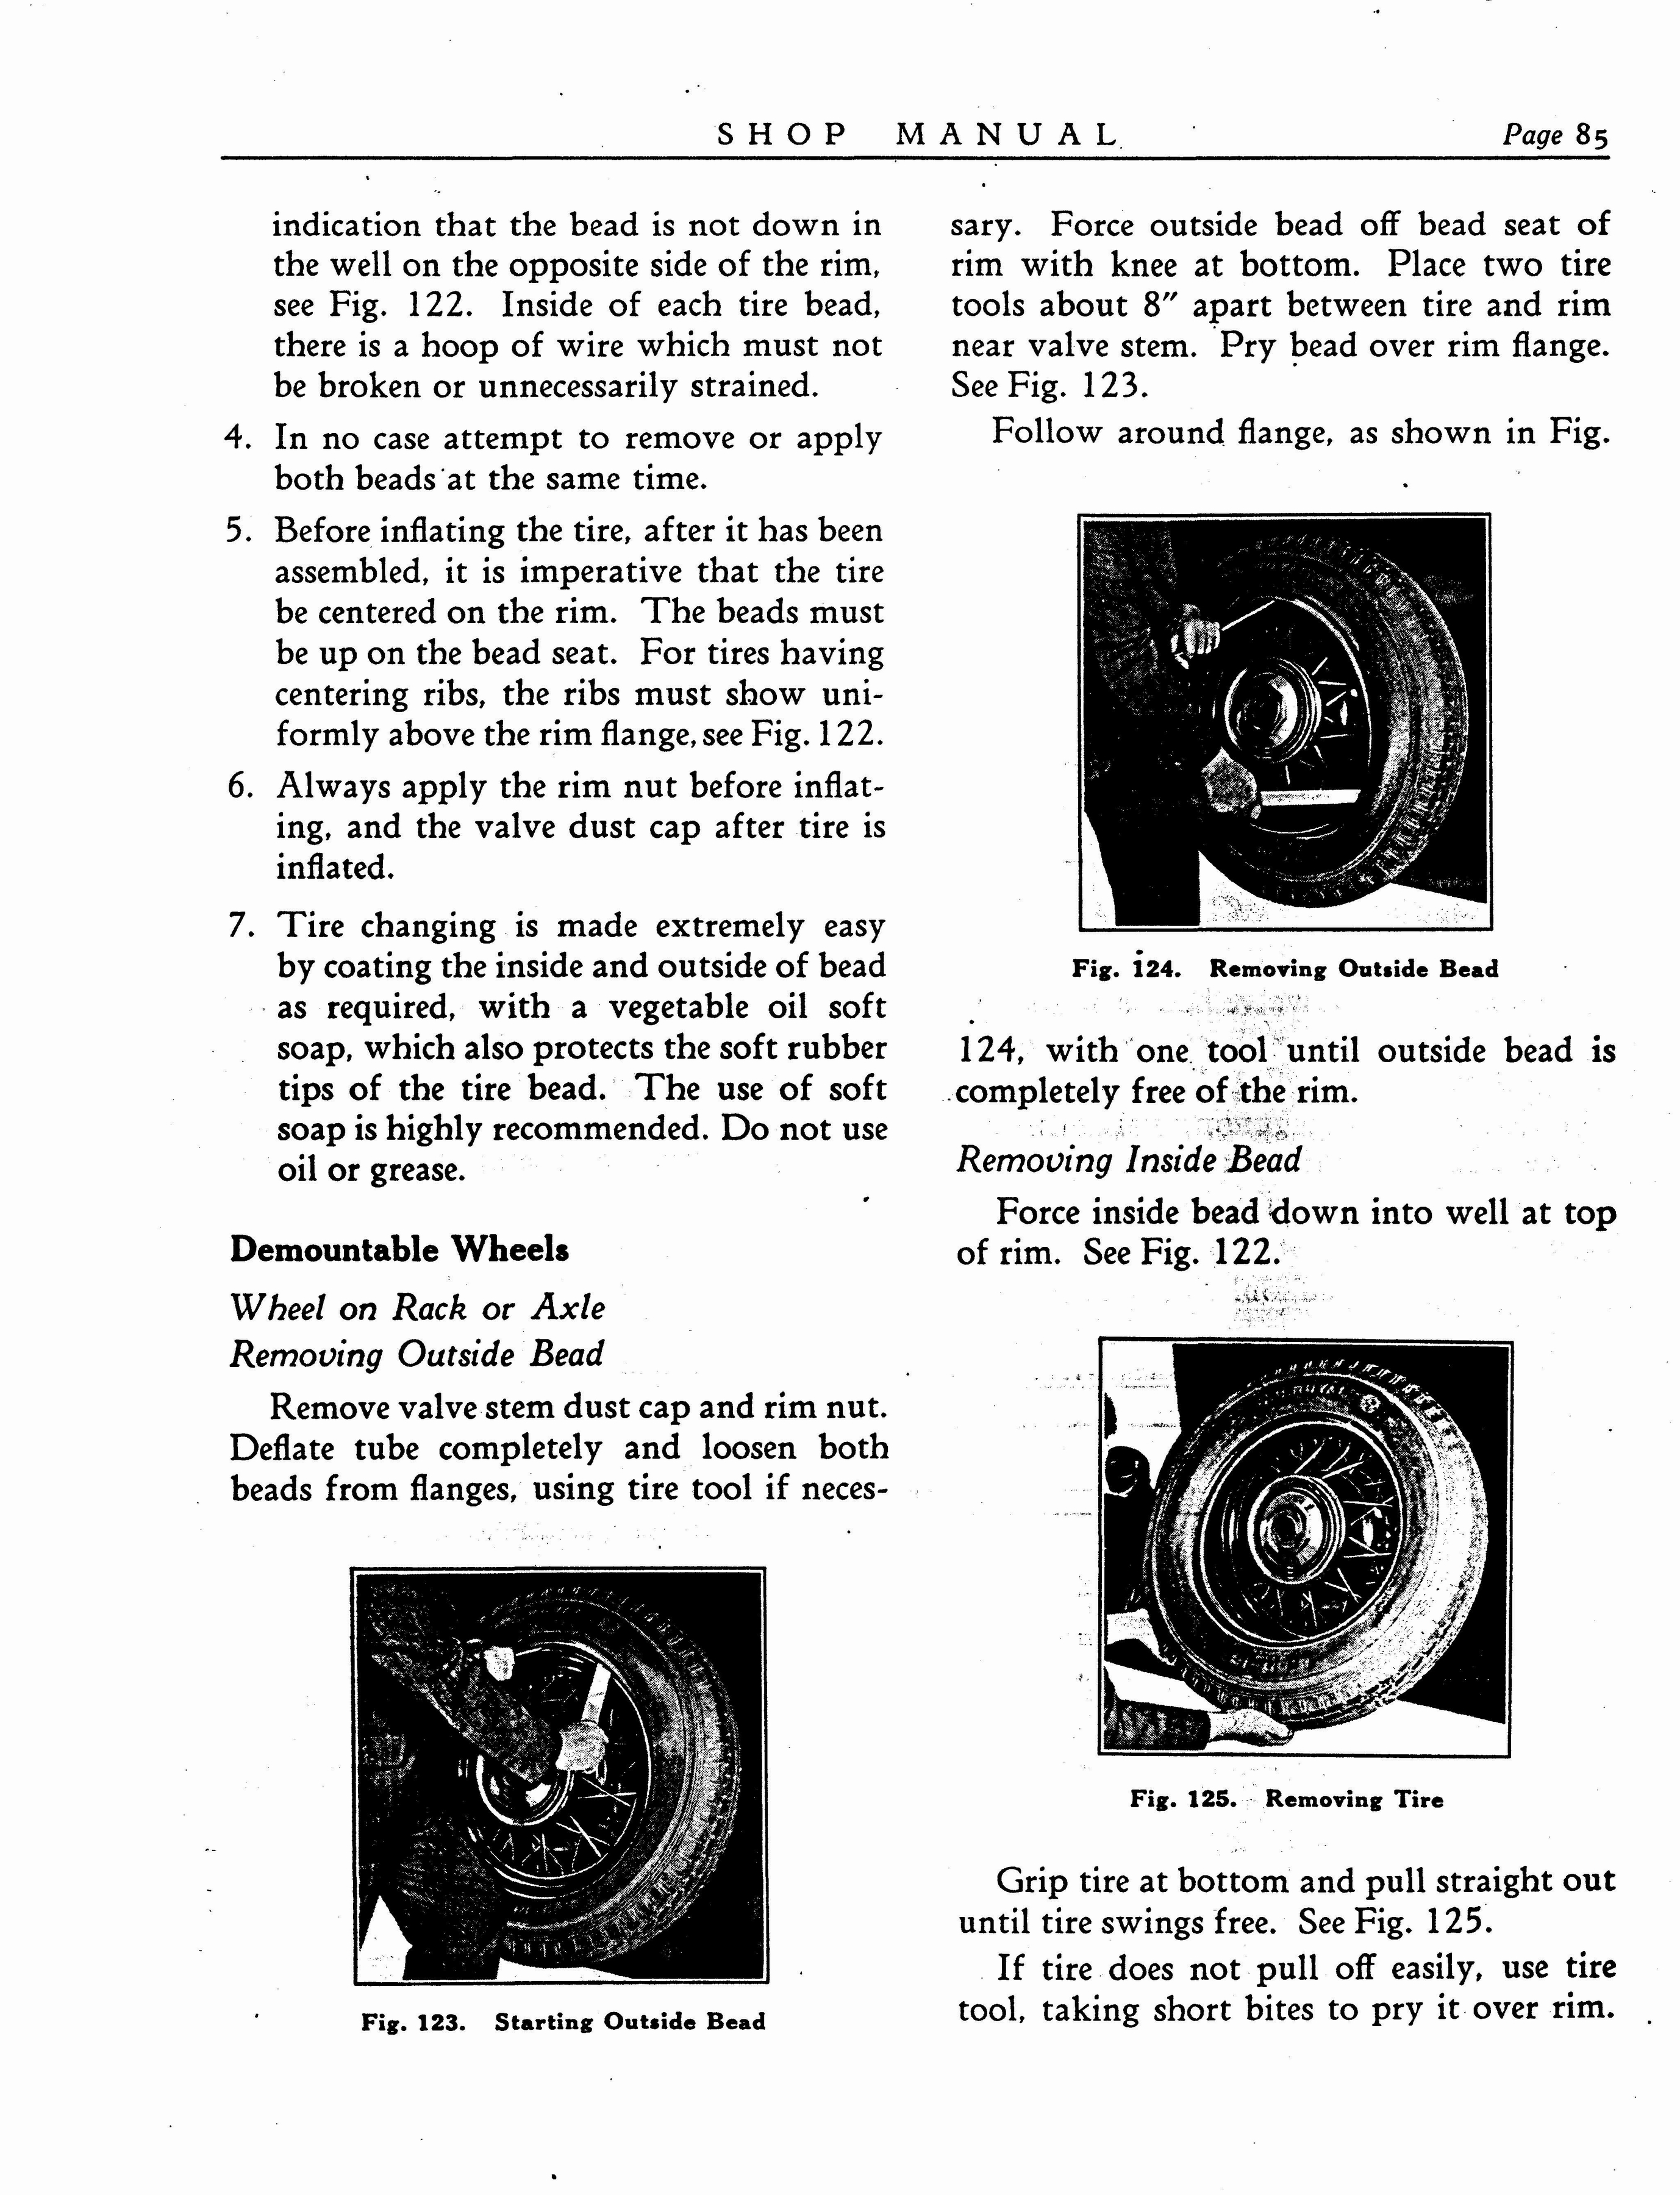 n_1933 Buick Shop Manual_Page_086.jpg